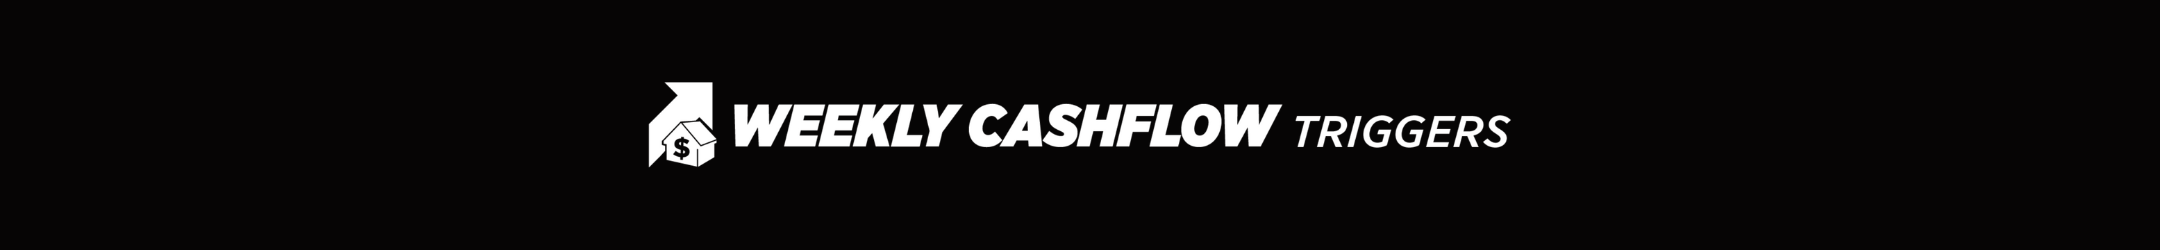 Weekly Cashflow Triggers